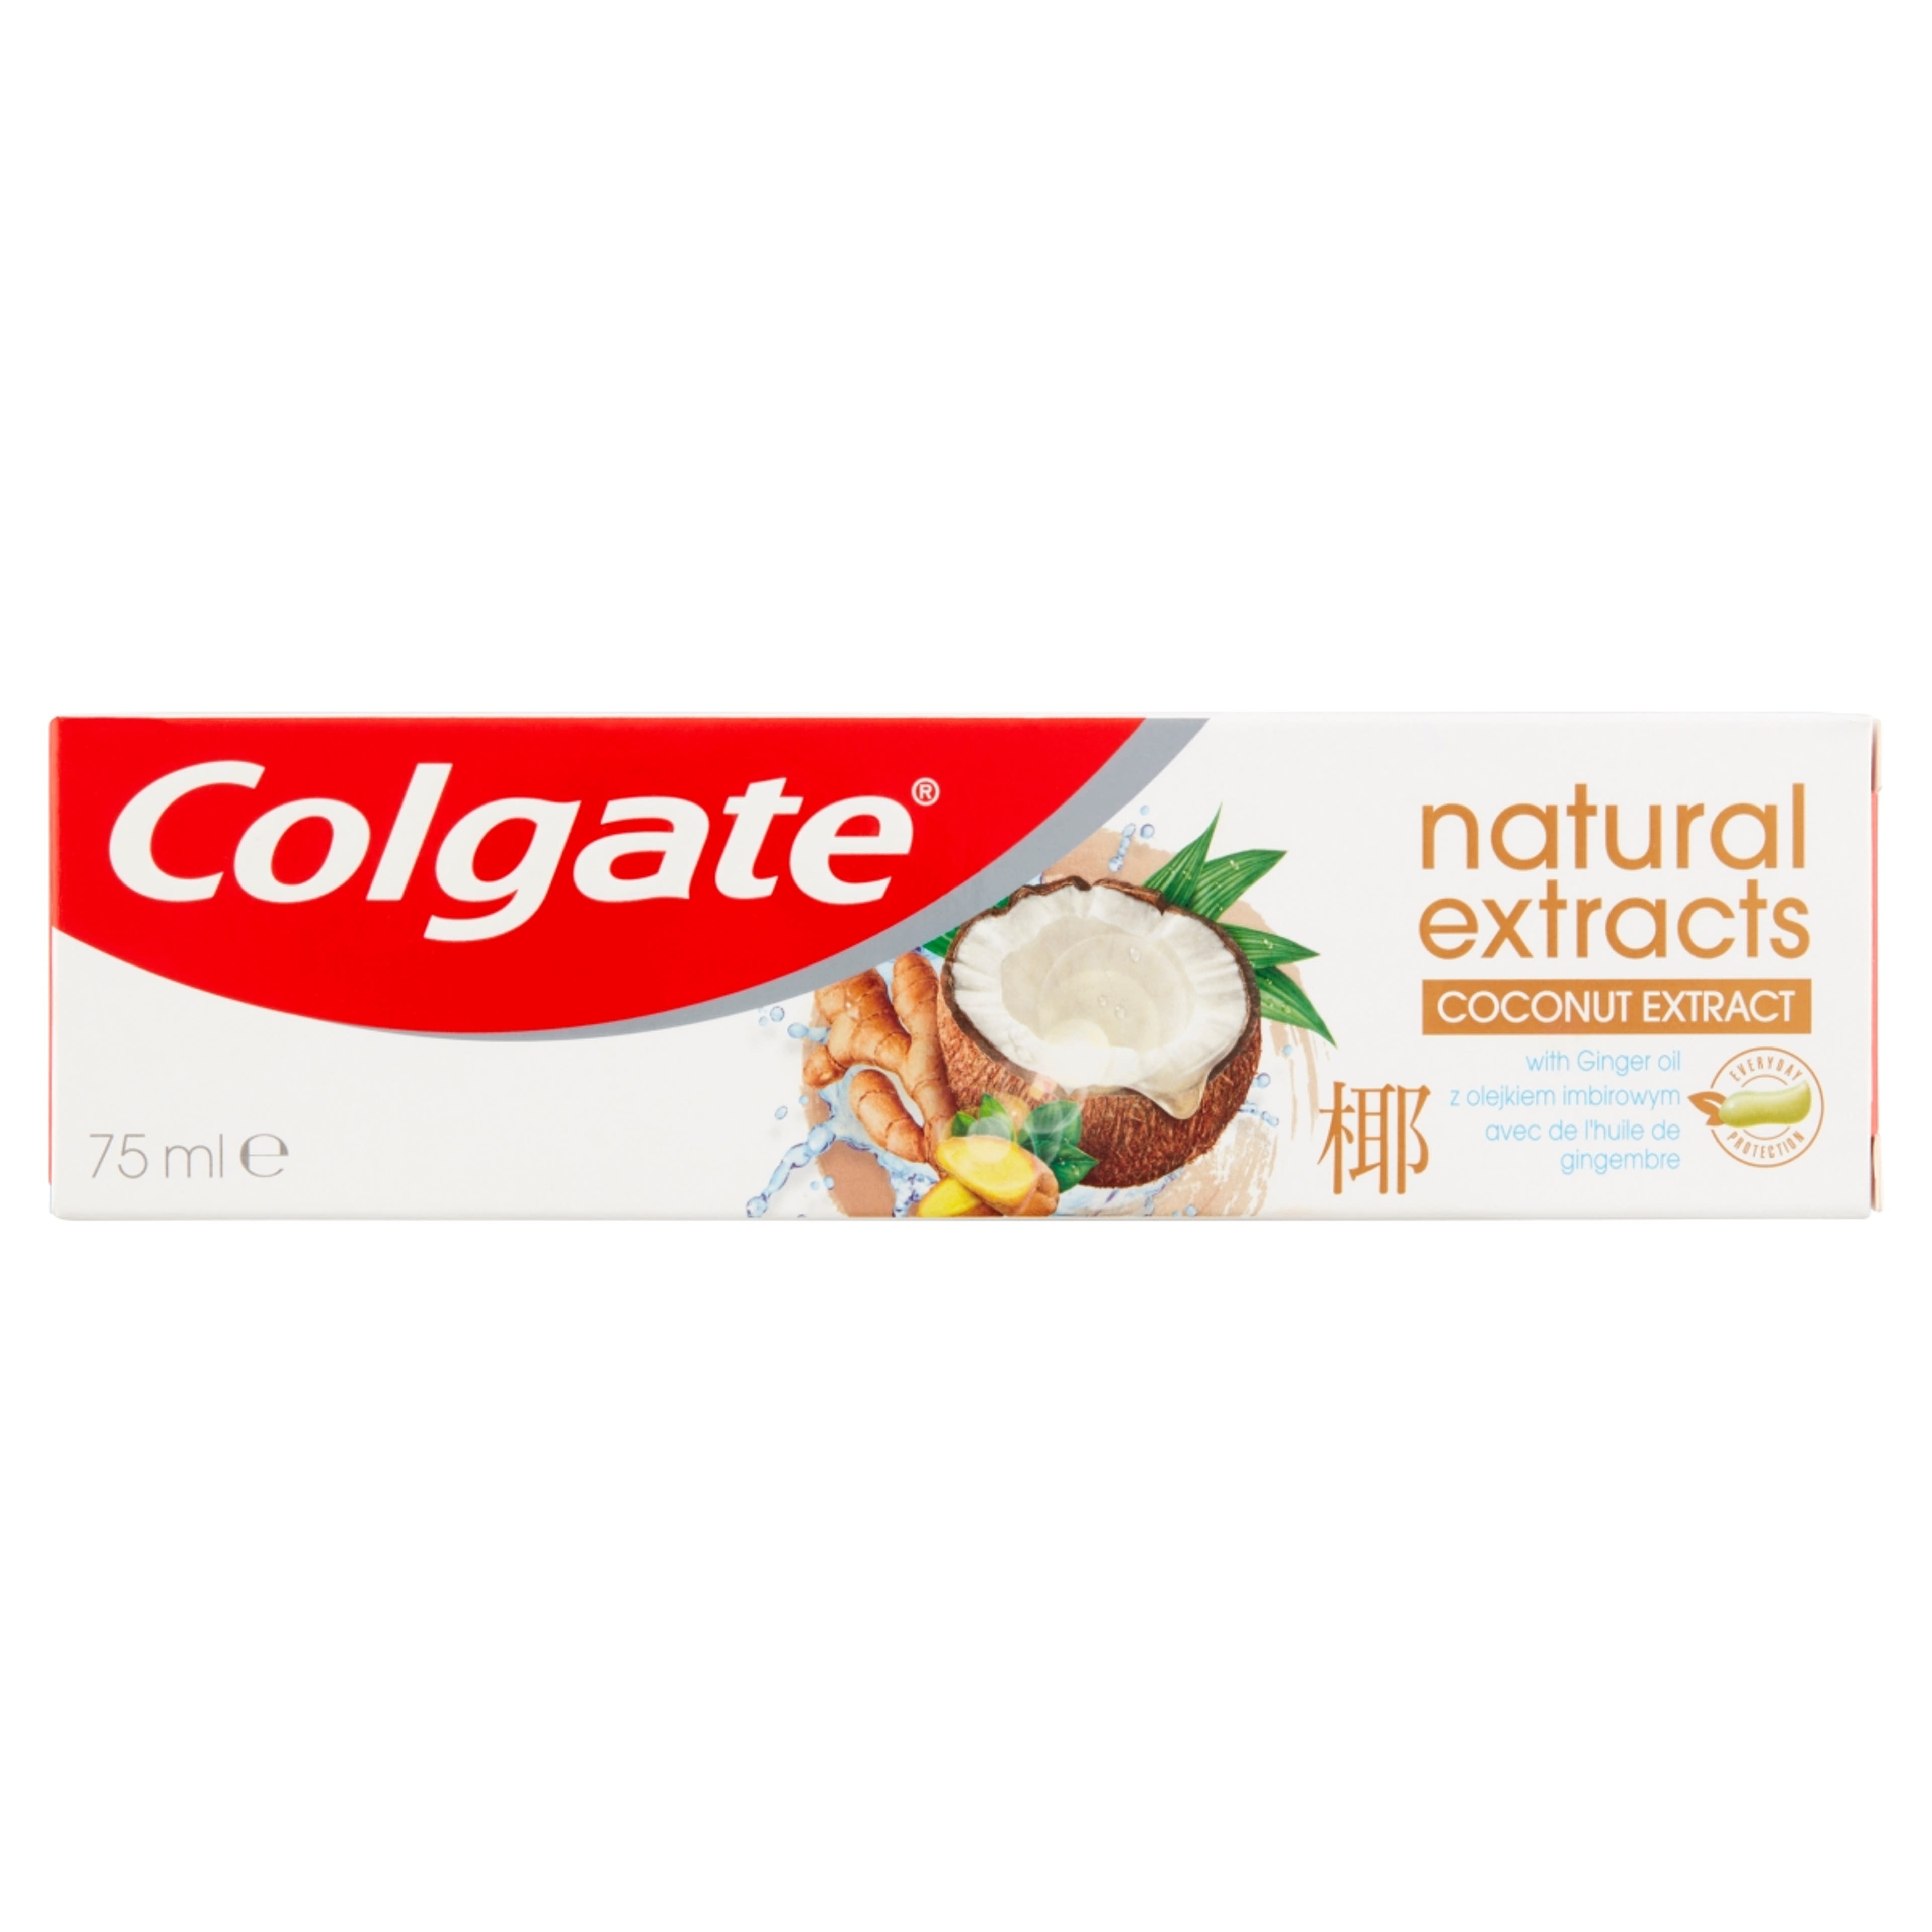 Colgate fogkrém natural extracts ginger&coco - 75 ml-1